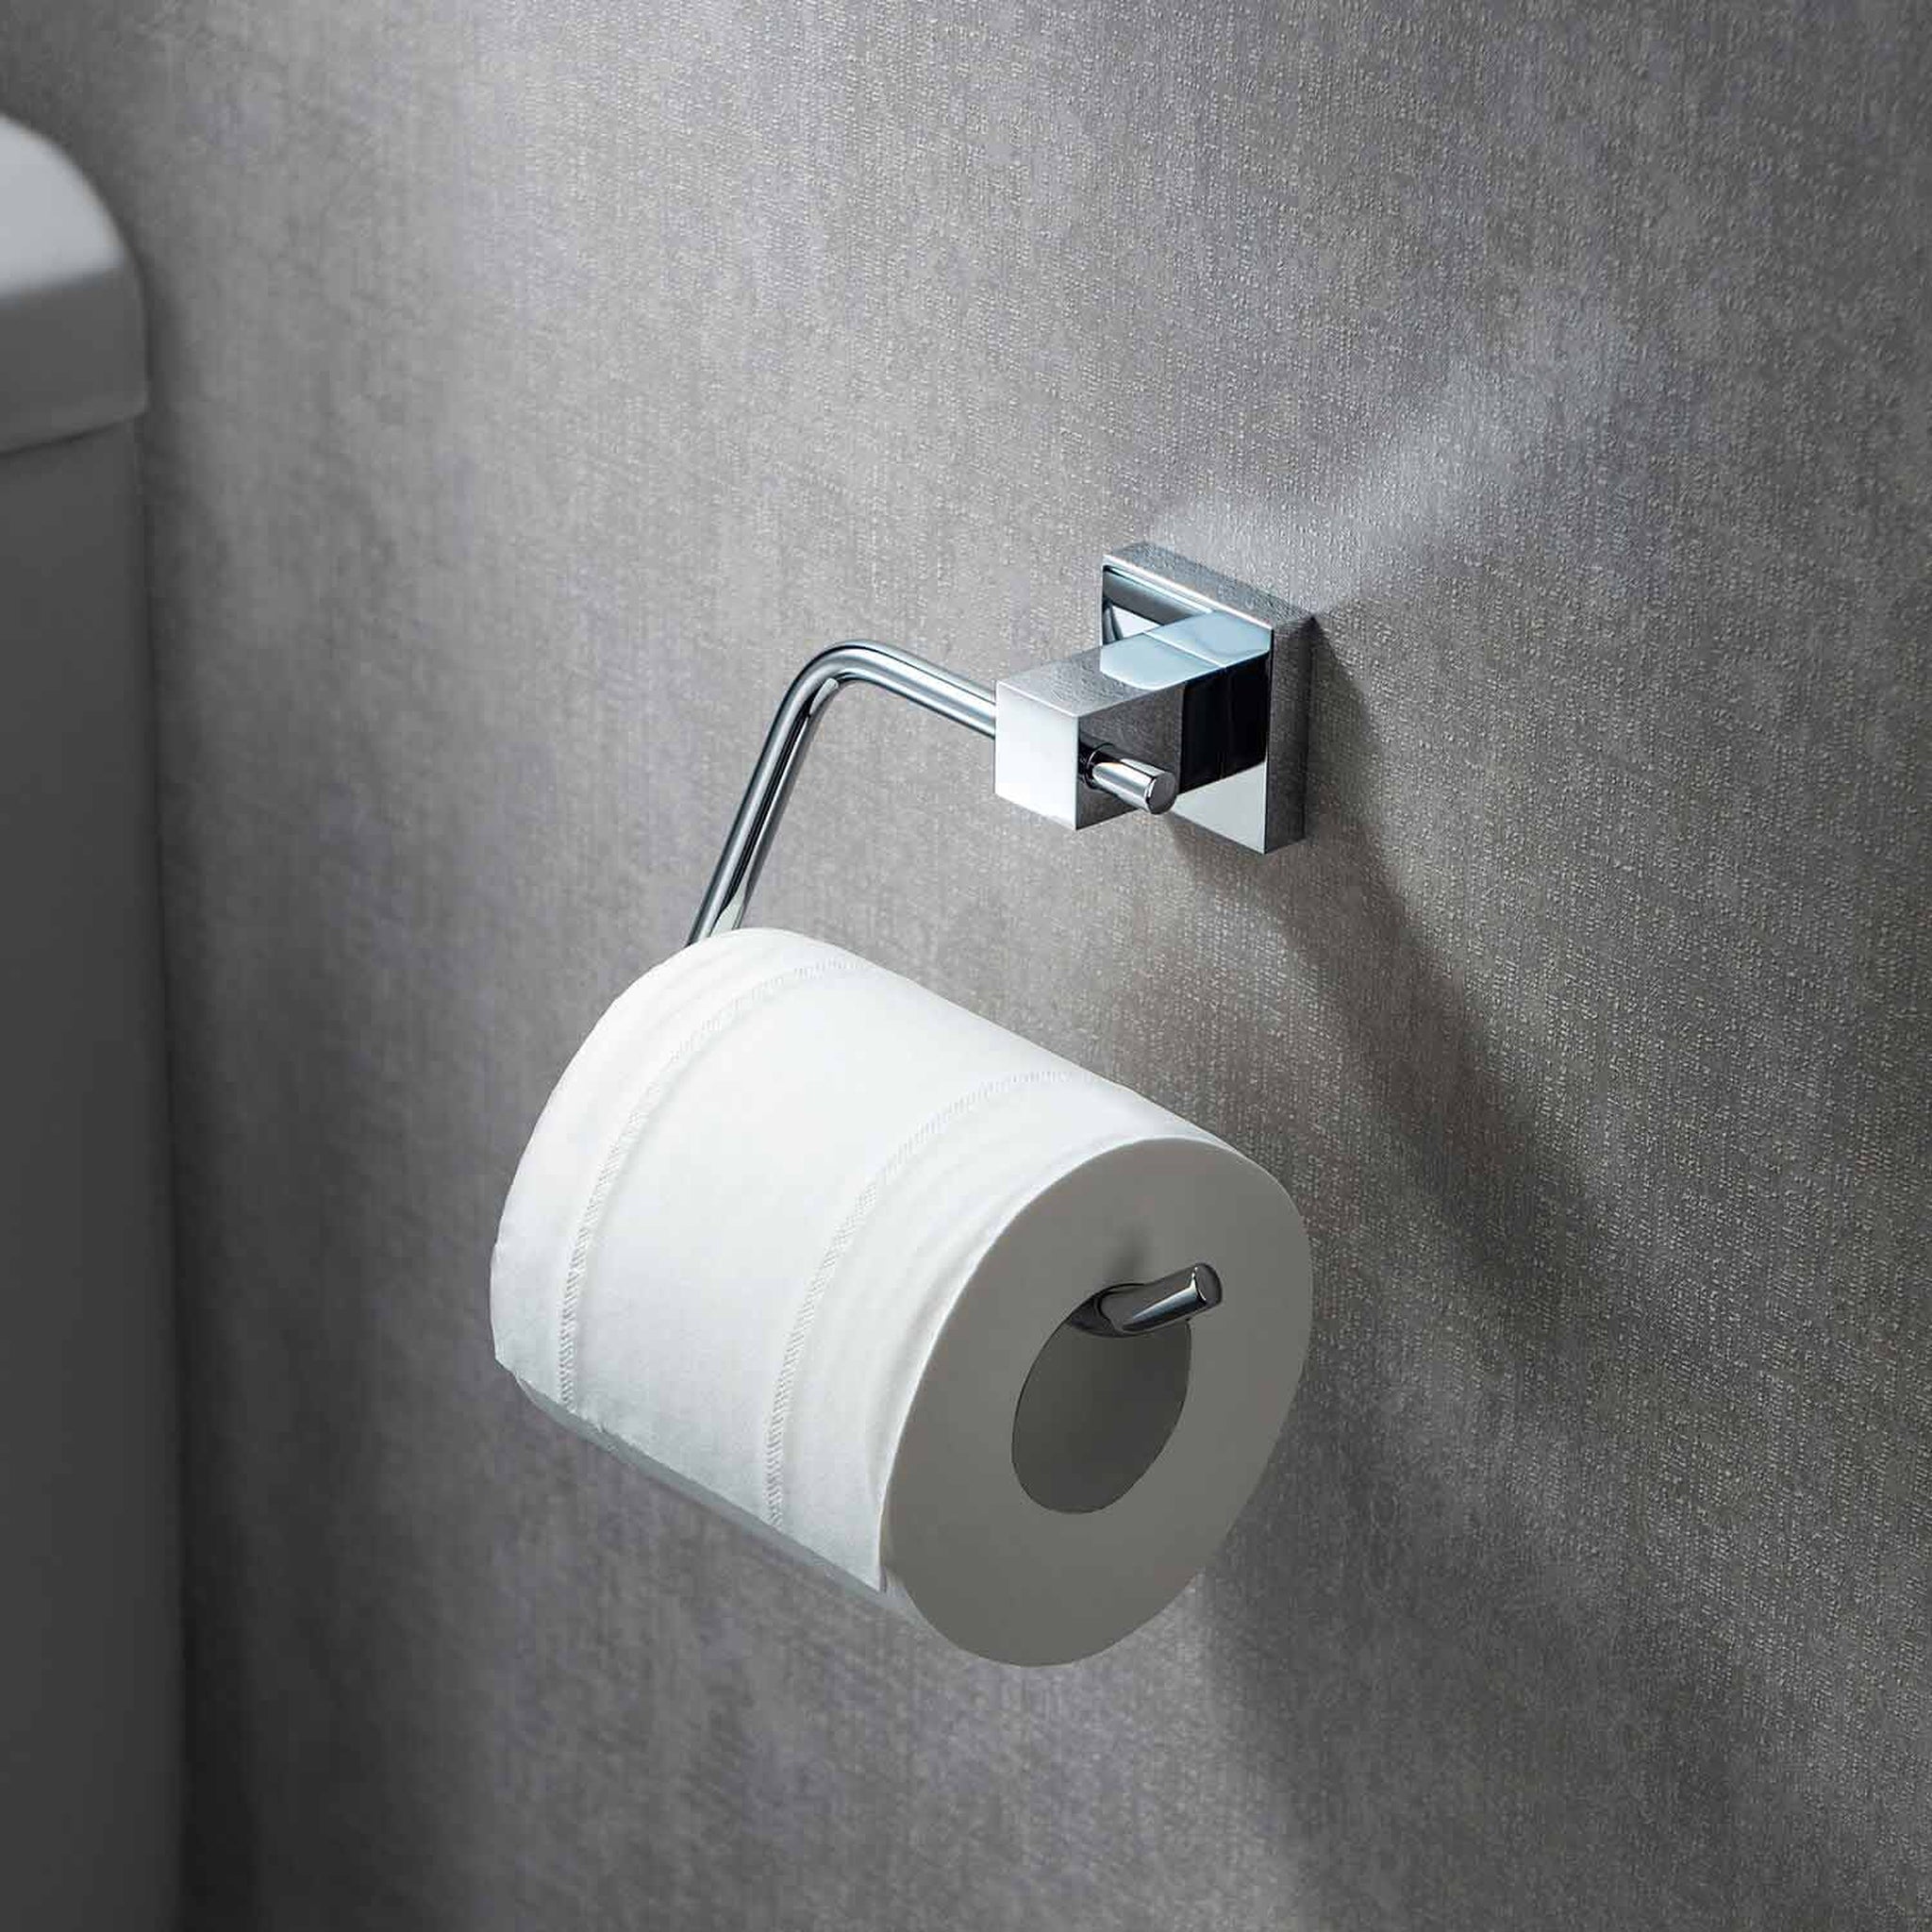 KIBI, KIBI Cube Brass Bathroom Toilet Paper Holder in Chrome Finish